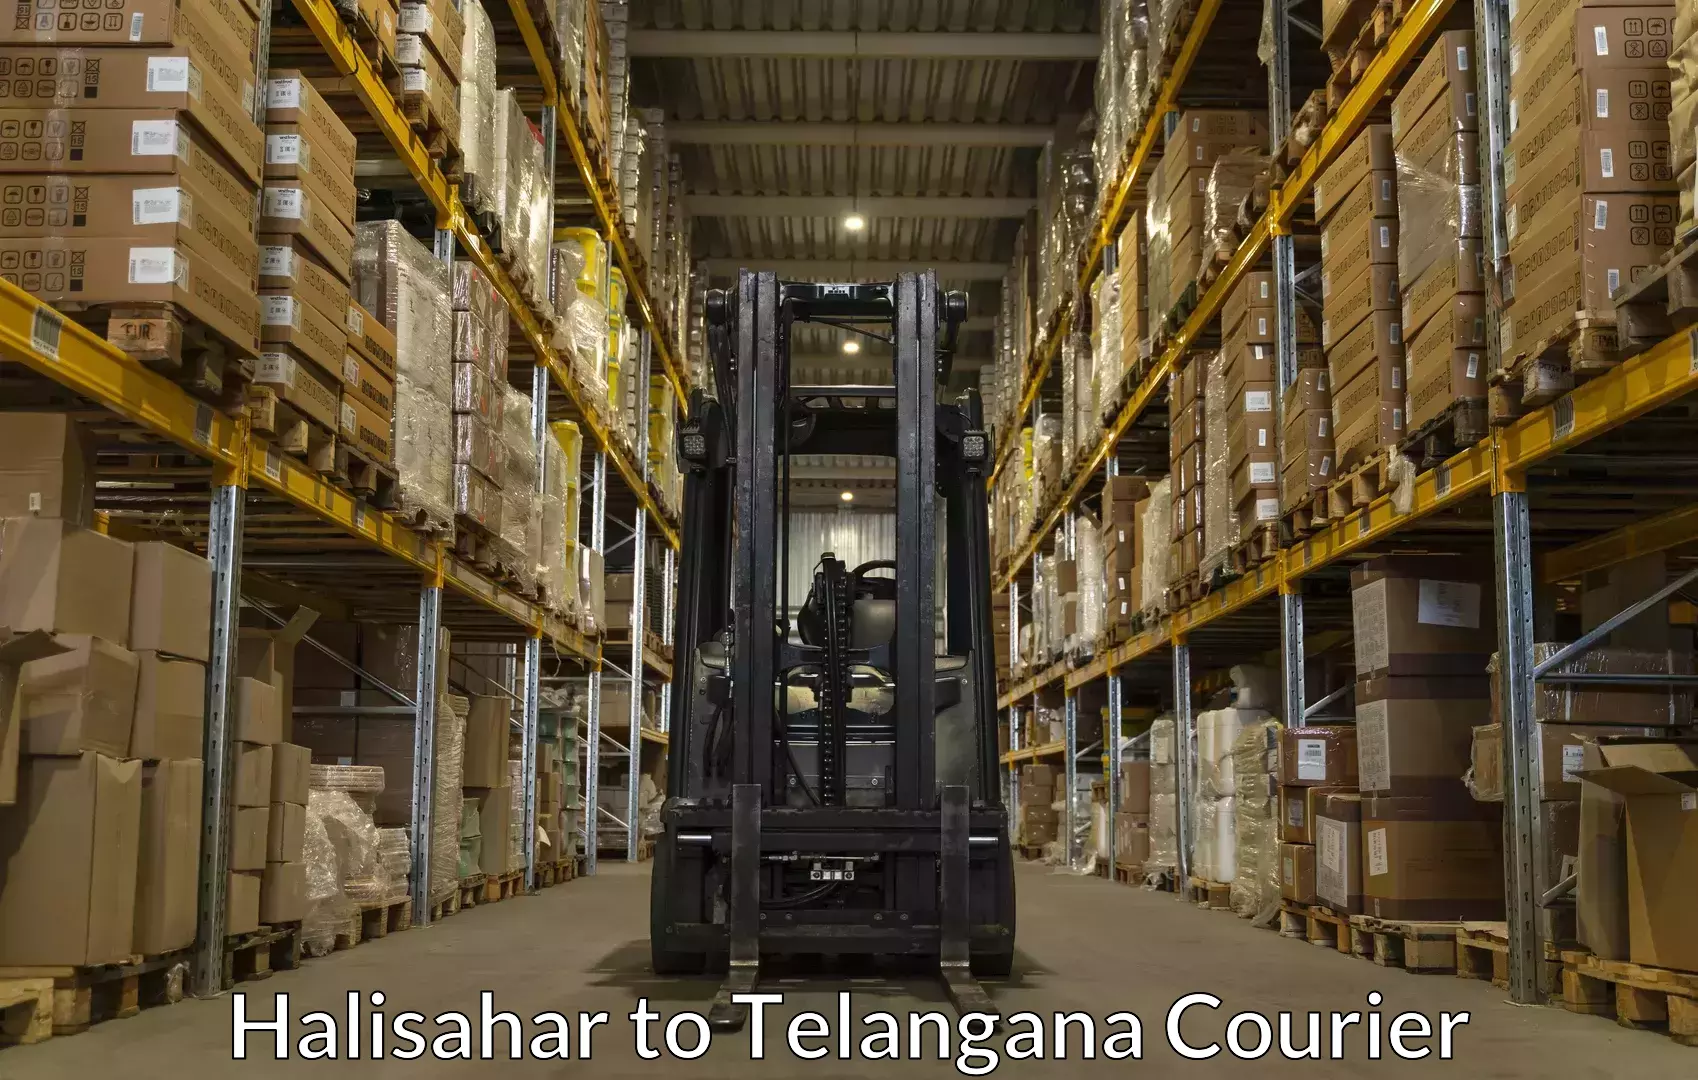 Luggage transport consultancy Halisahar to Manneguda